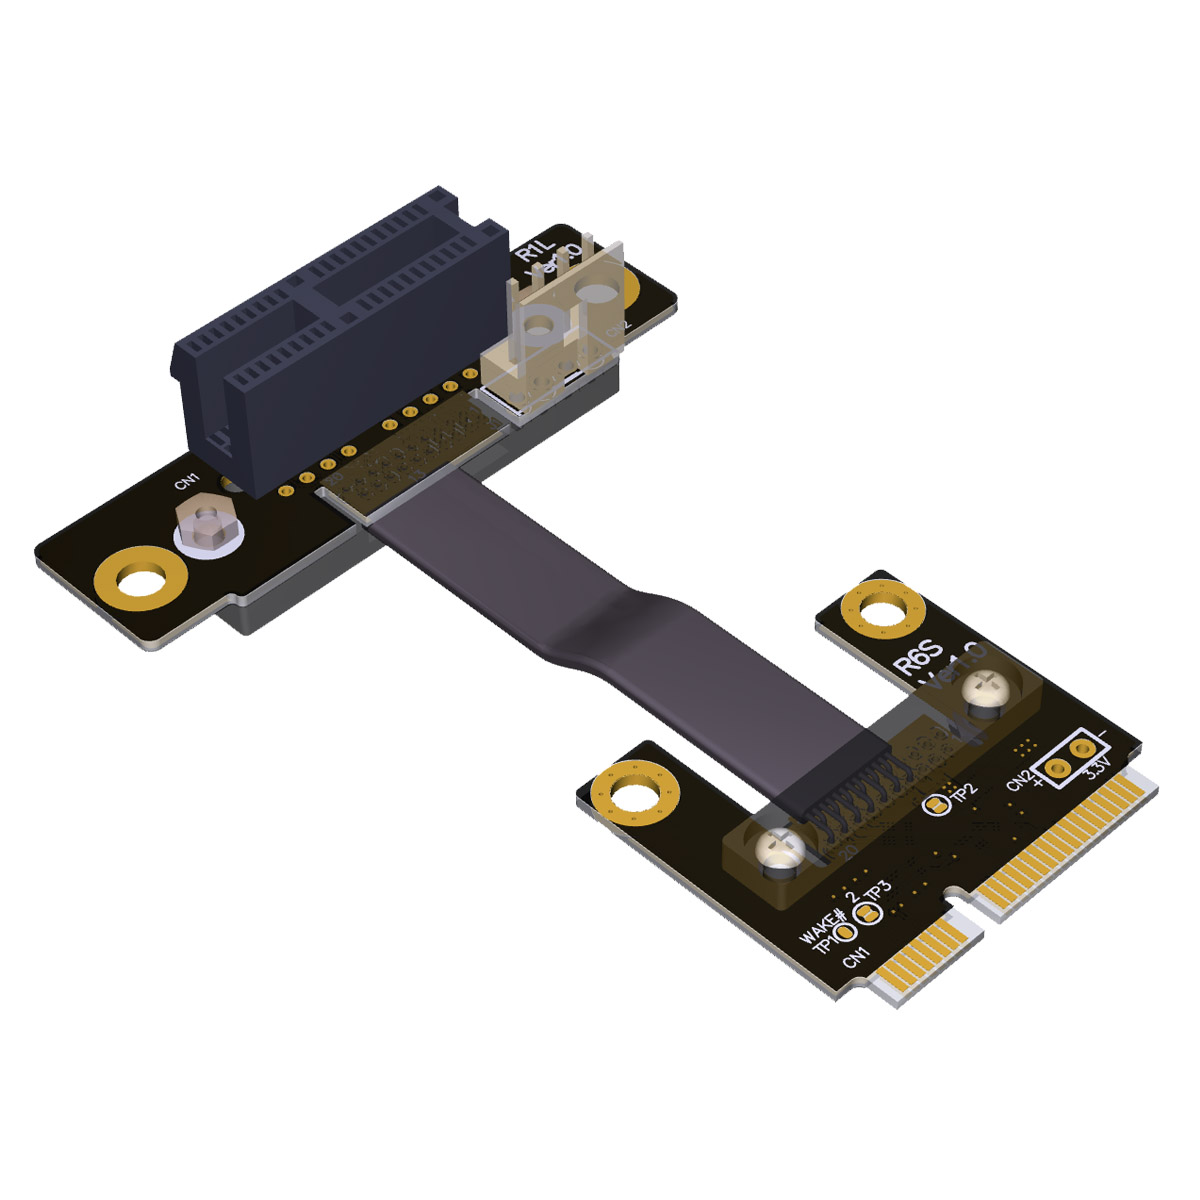 Mini PCI-E mSATA SSD to Lenovo X1 Carbon SSD Add on Cards PCBA with LIF Cable